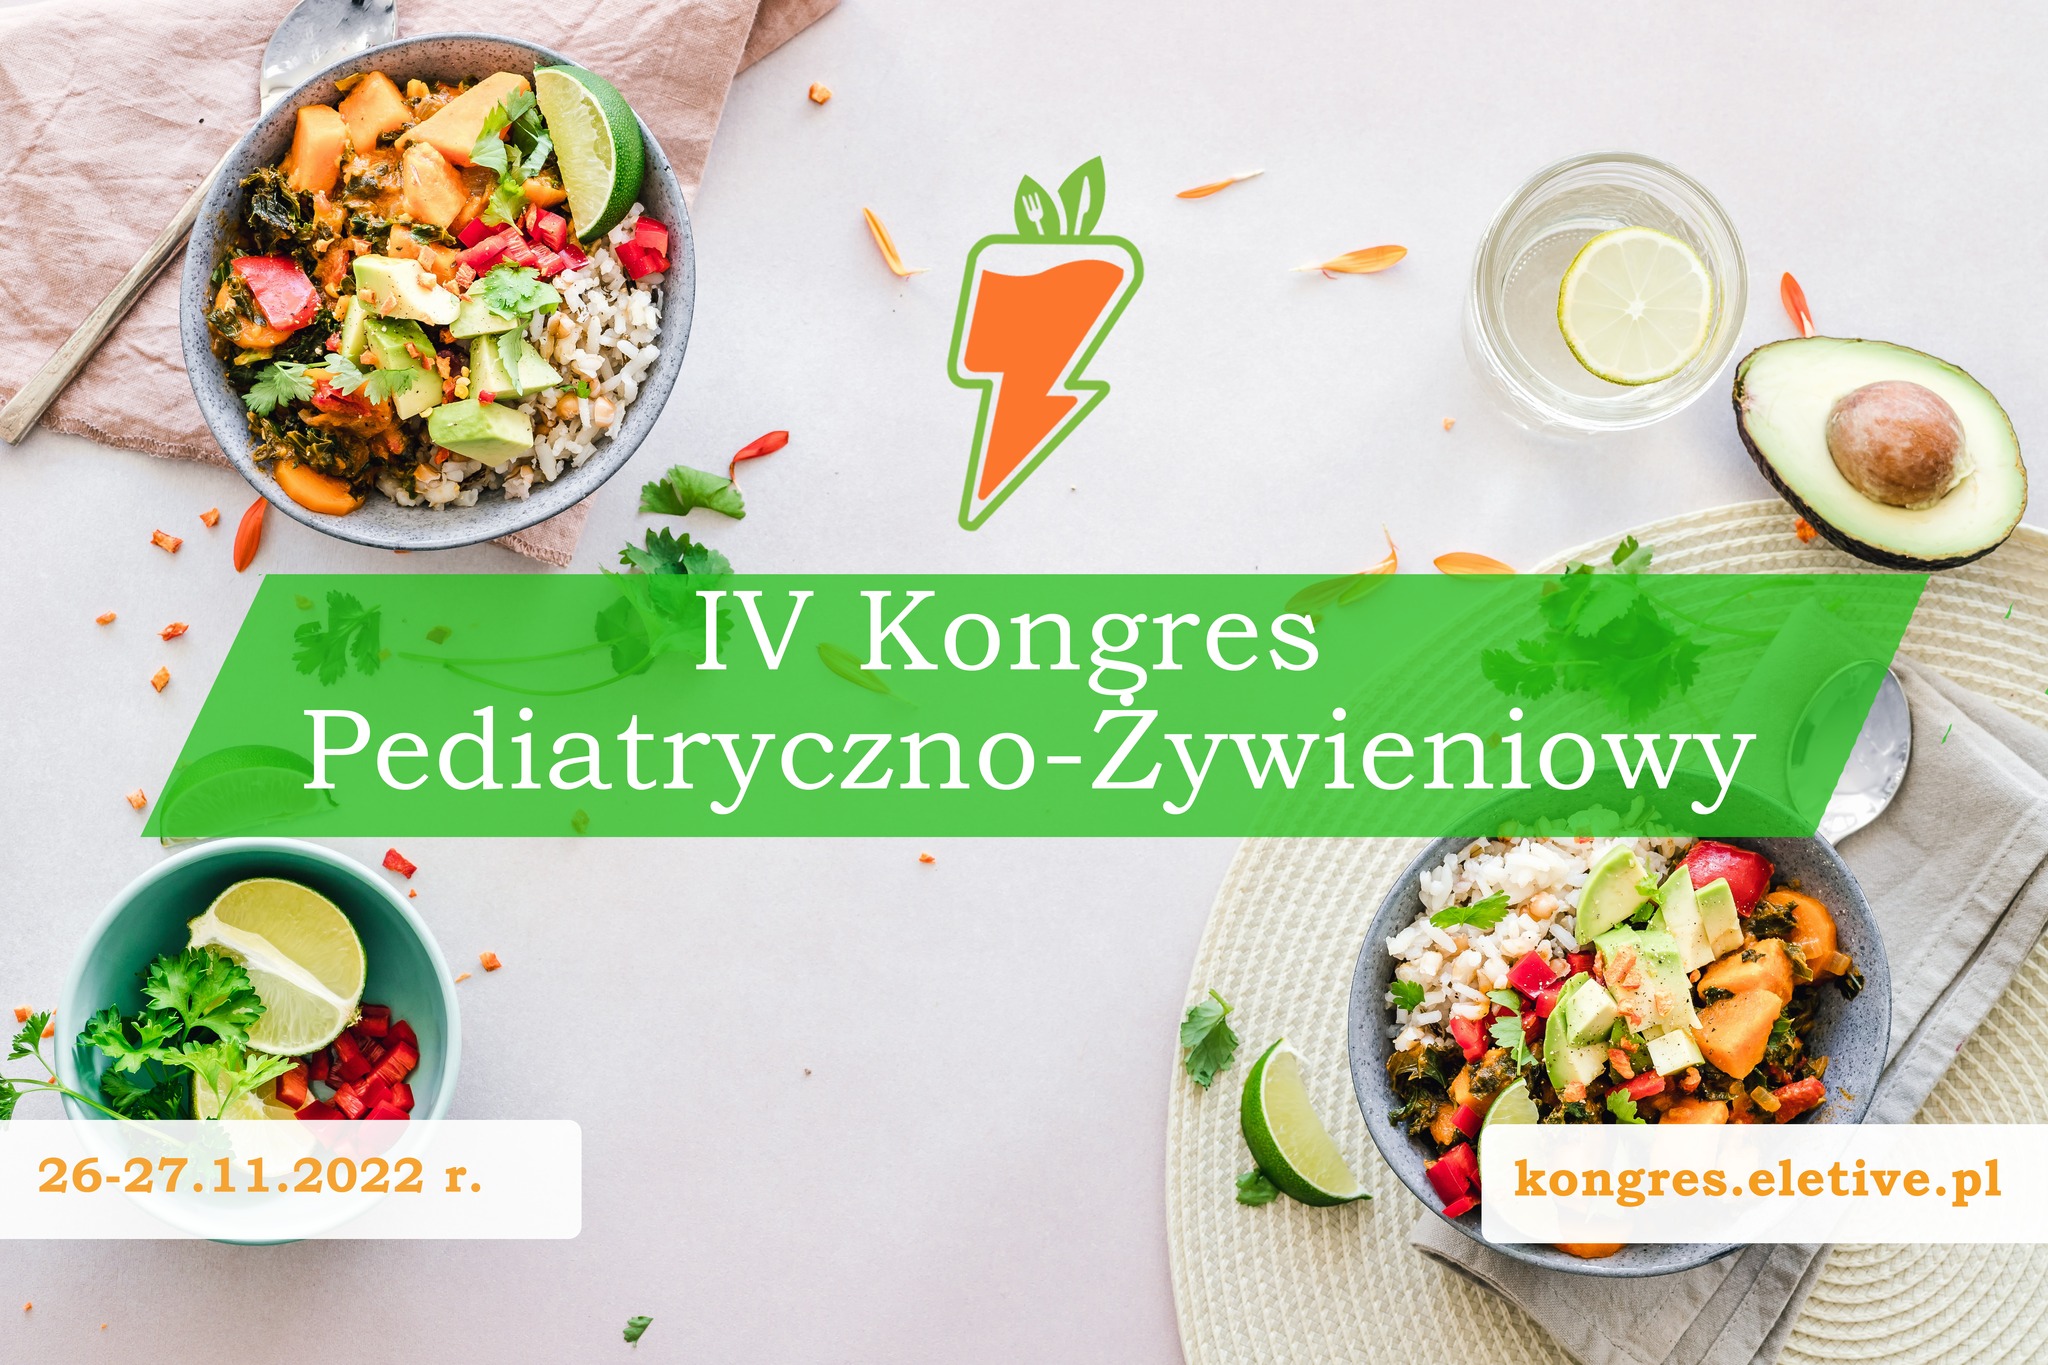 You are currently viewing IV Kongres Pediatryczno-Żywieniowy